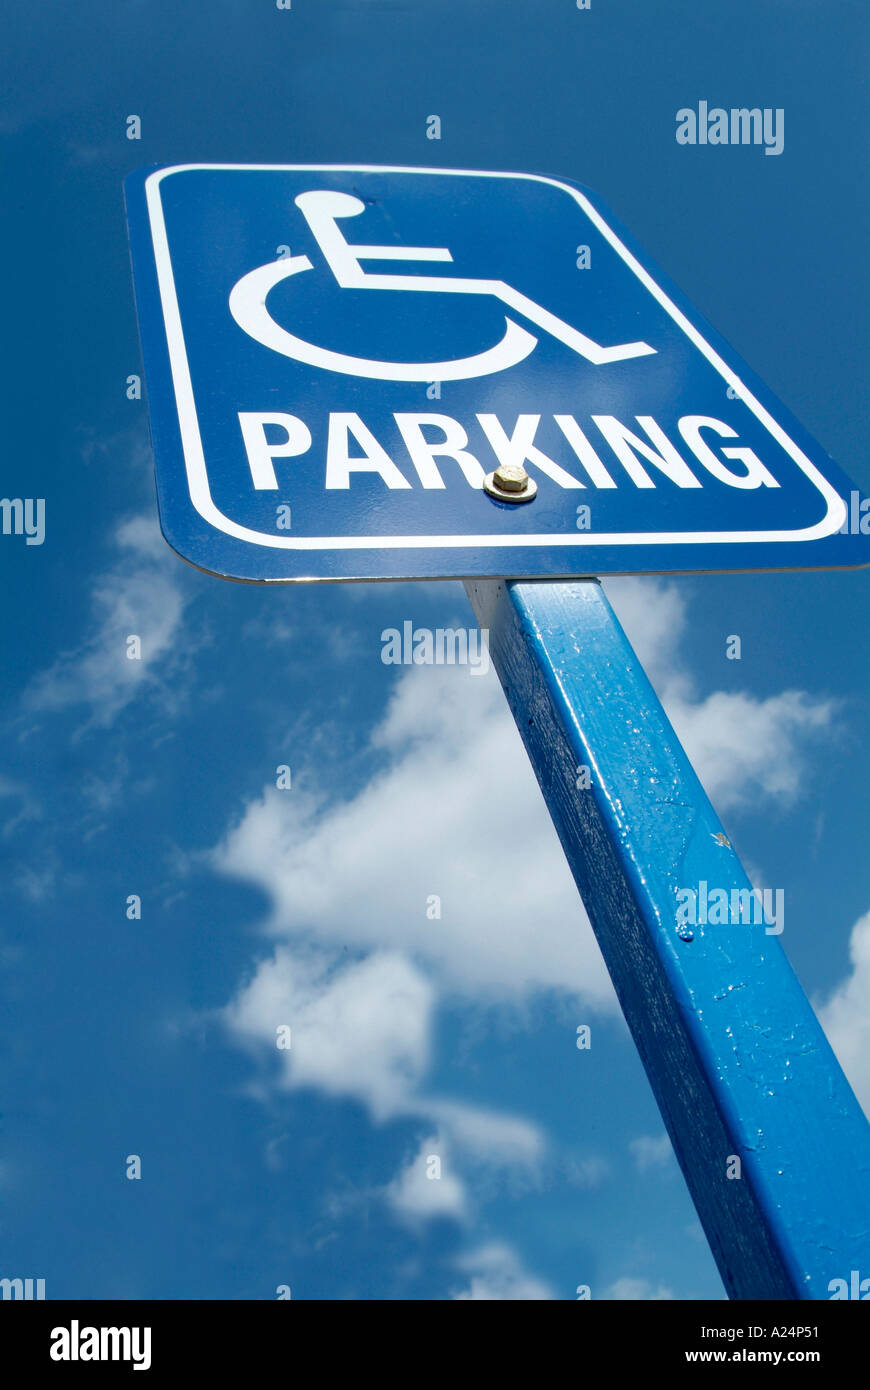 Handicap parking sign Stock Photo